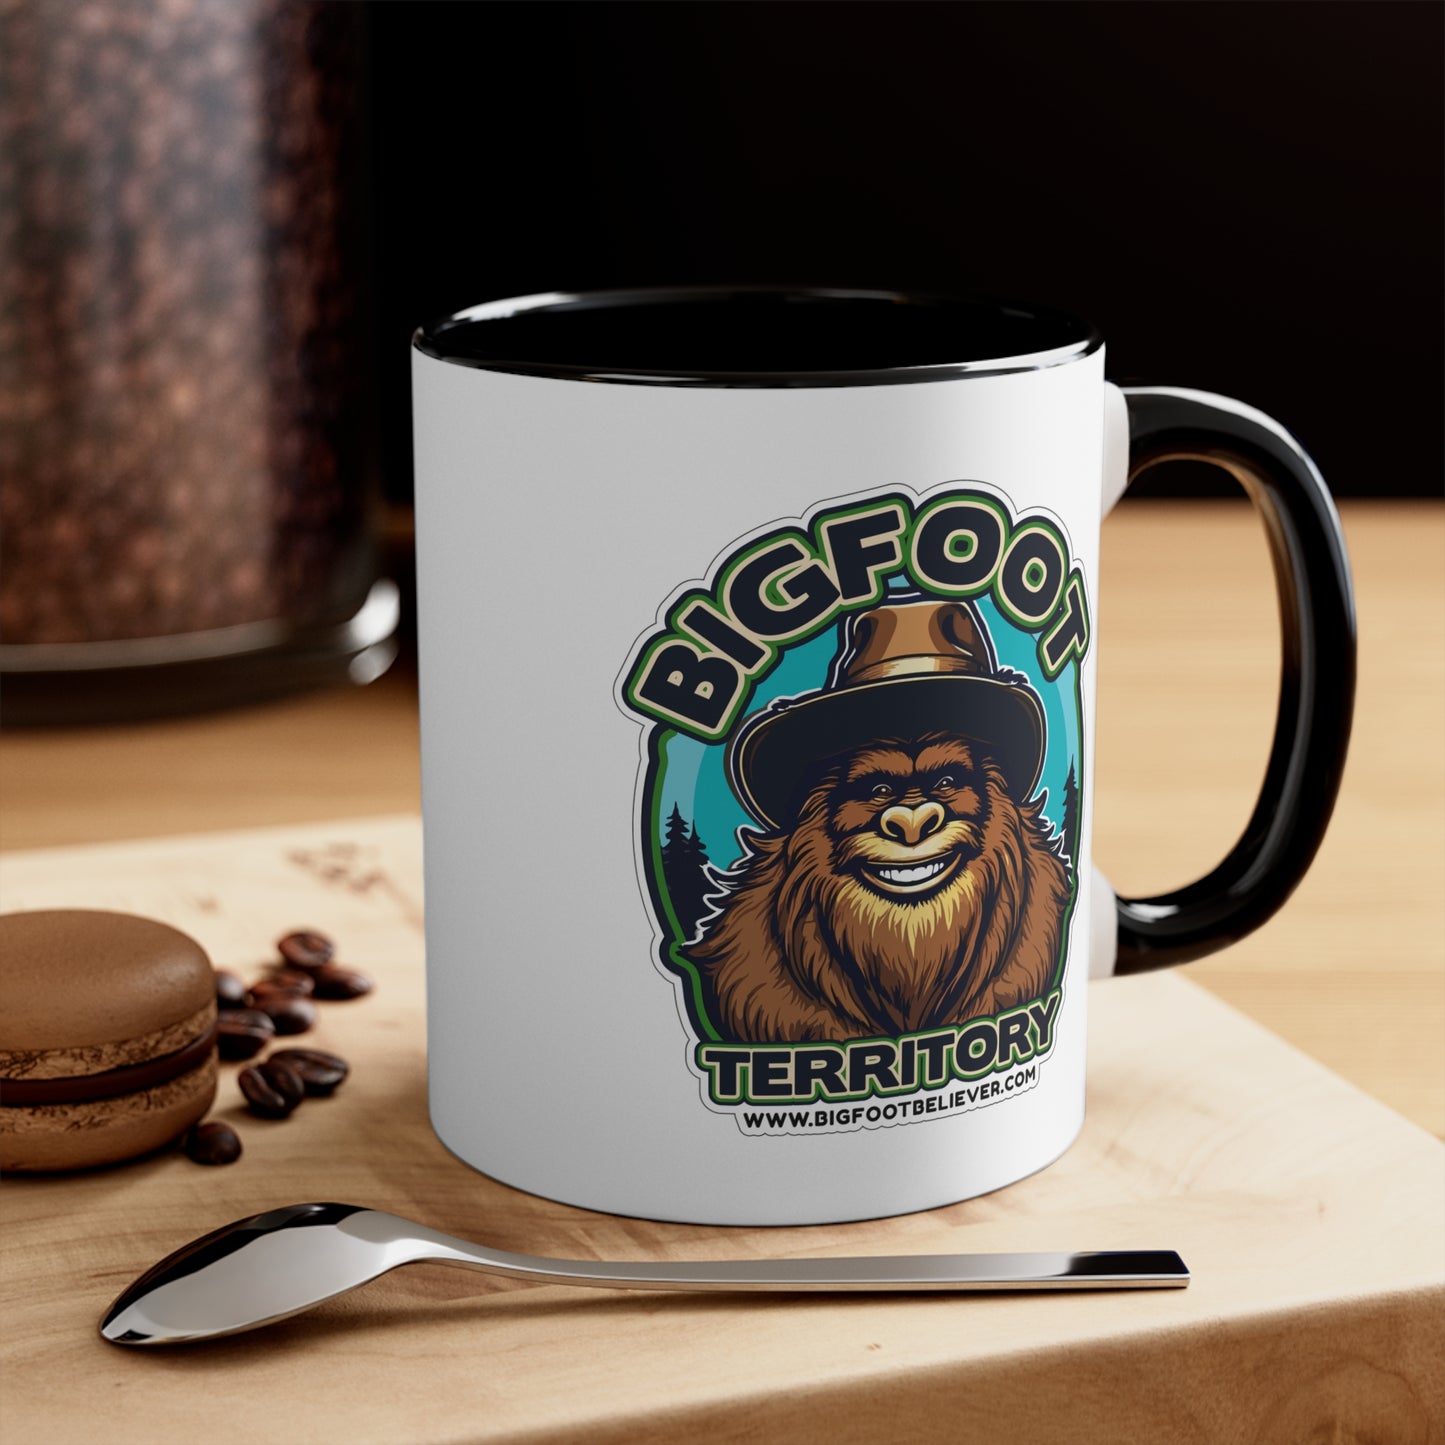 Bigfoot Territory Accent Coffee Mug, 11oz